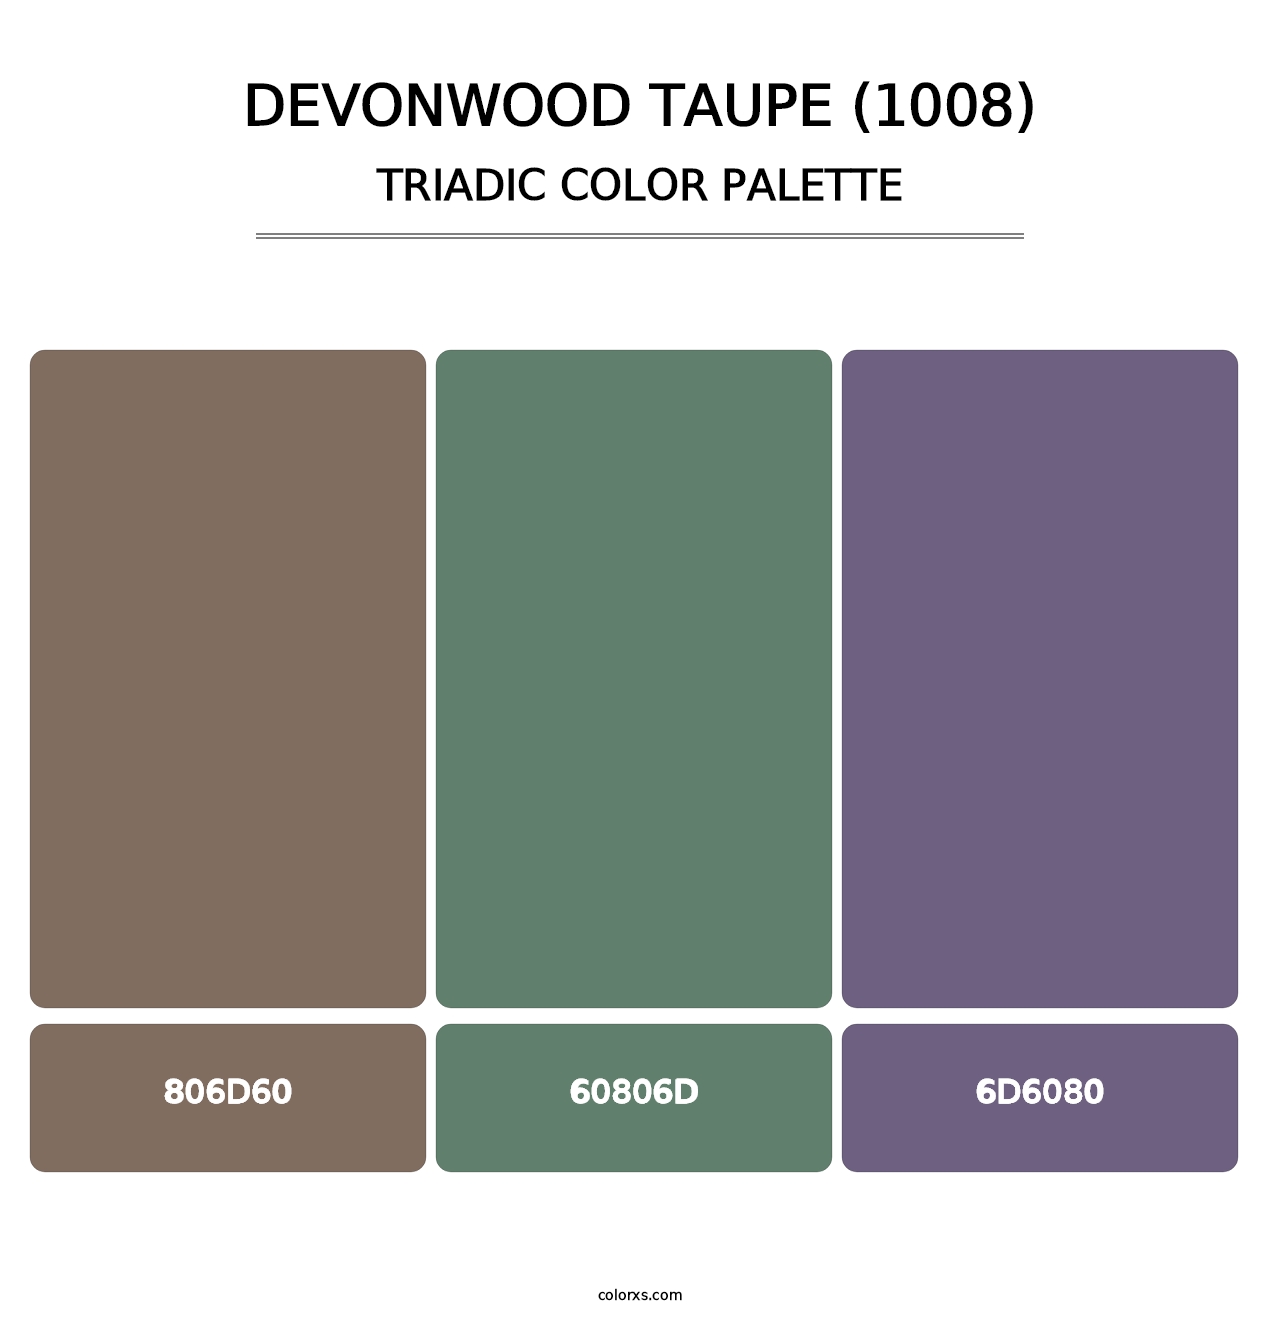 Devonwood Taupe (1008) - Triadic Color Palette